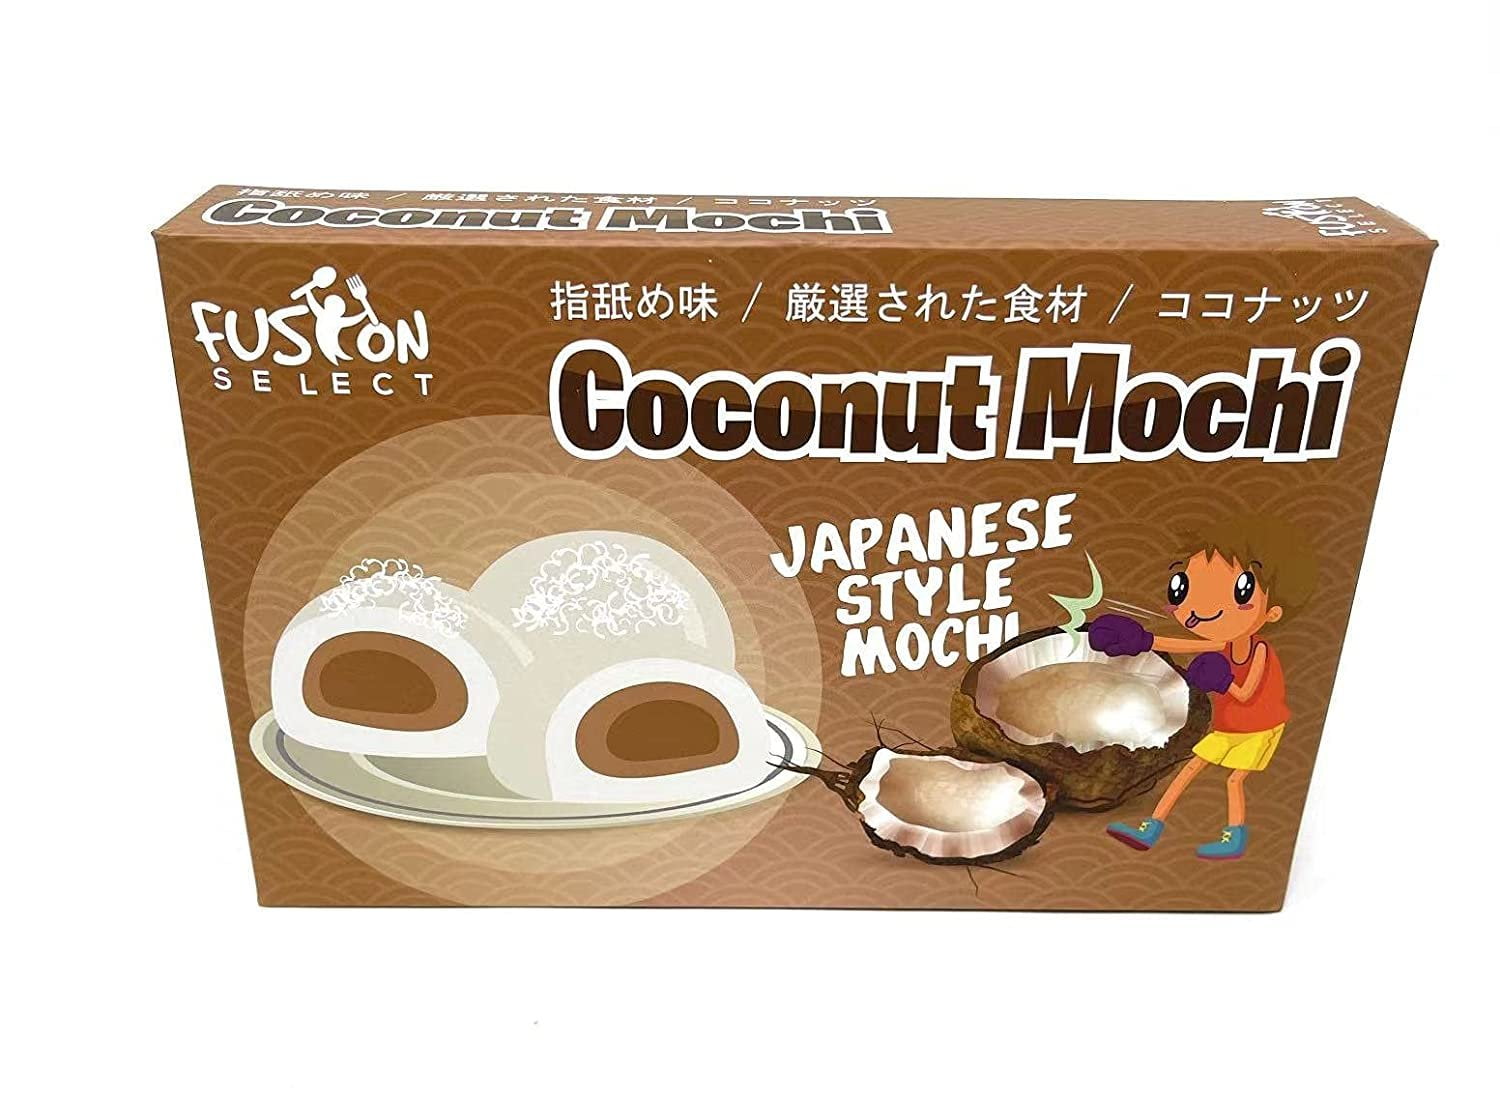 Fruity Mochii Ice-Cream Set (12), SnackMagic